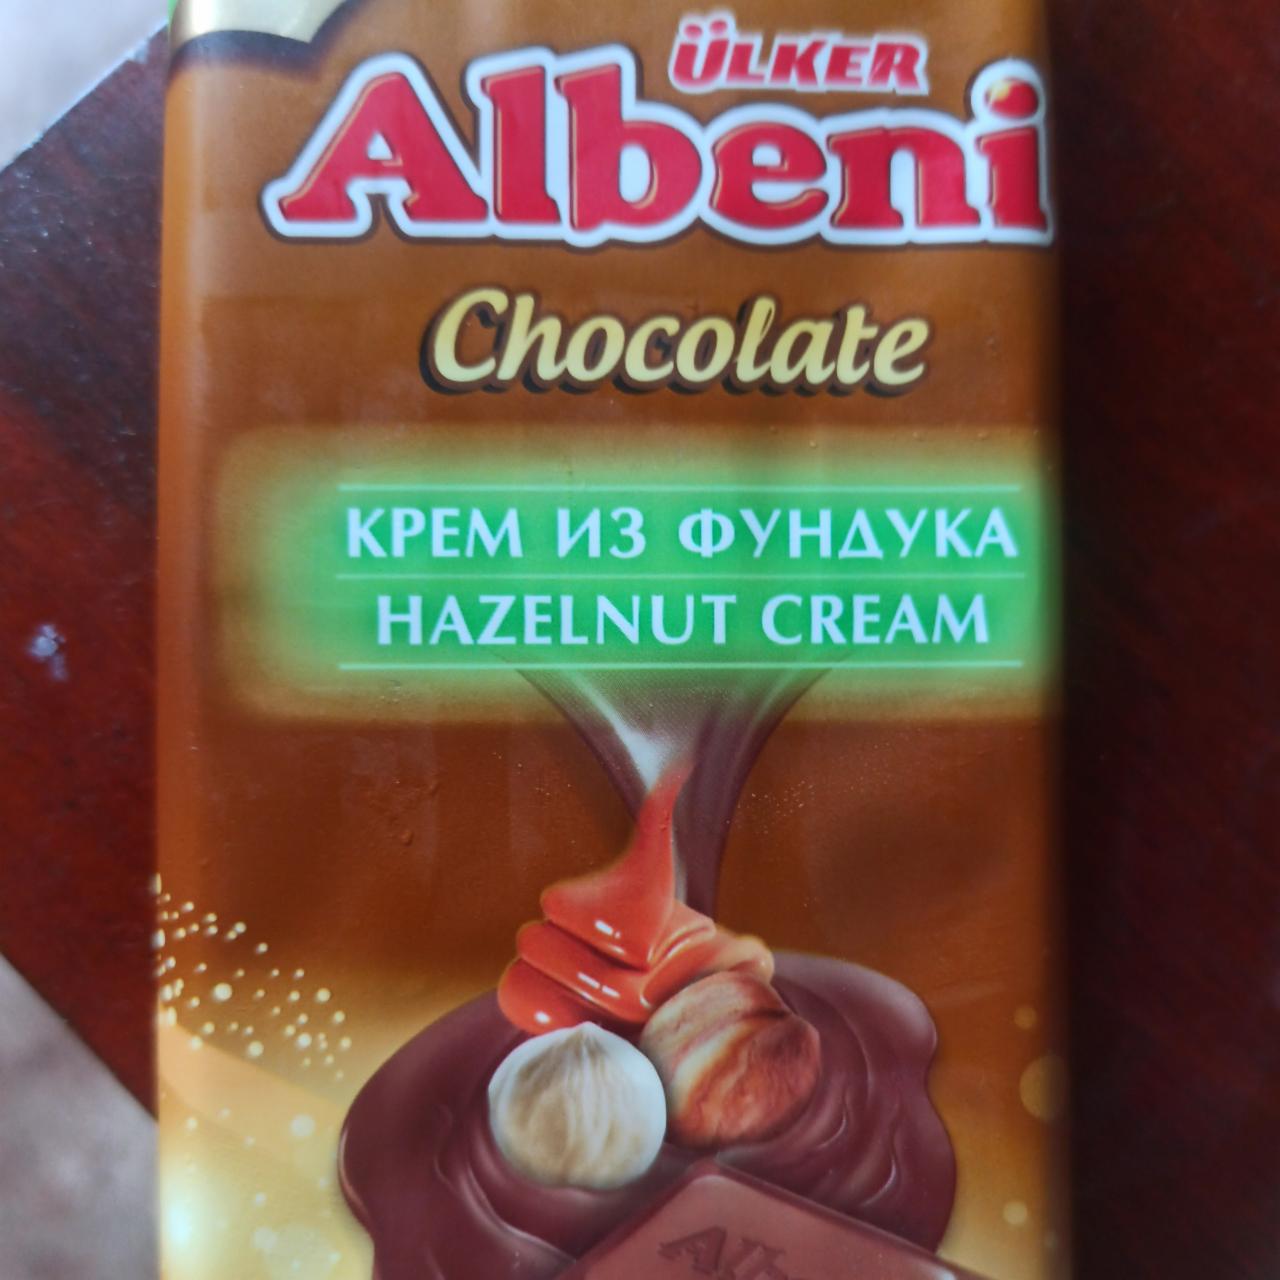 Фото - Шоколад крем из фундука Albeni Ulker